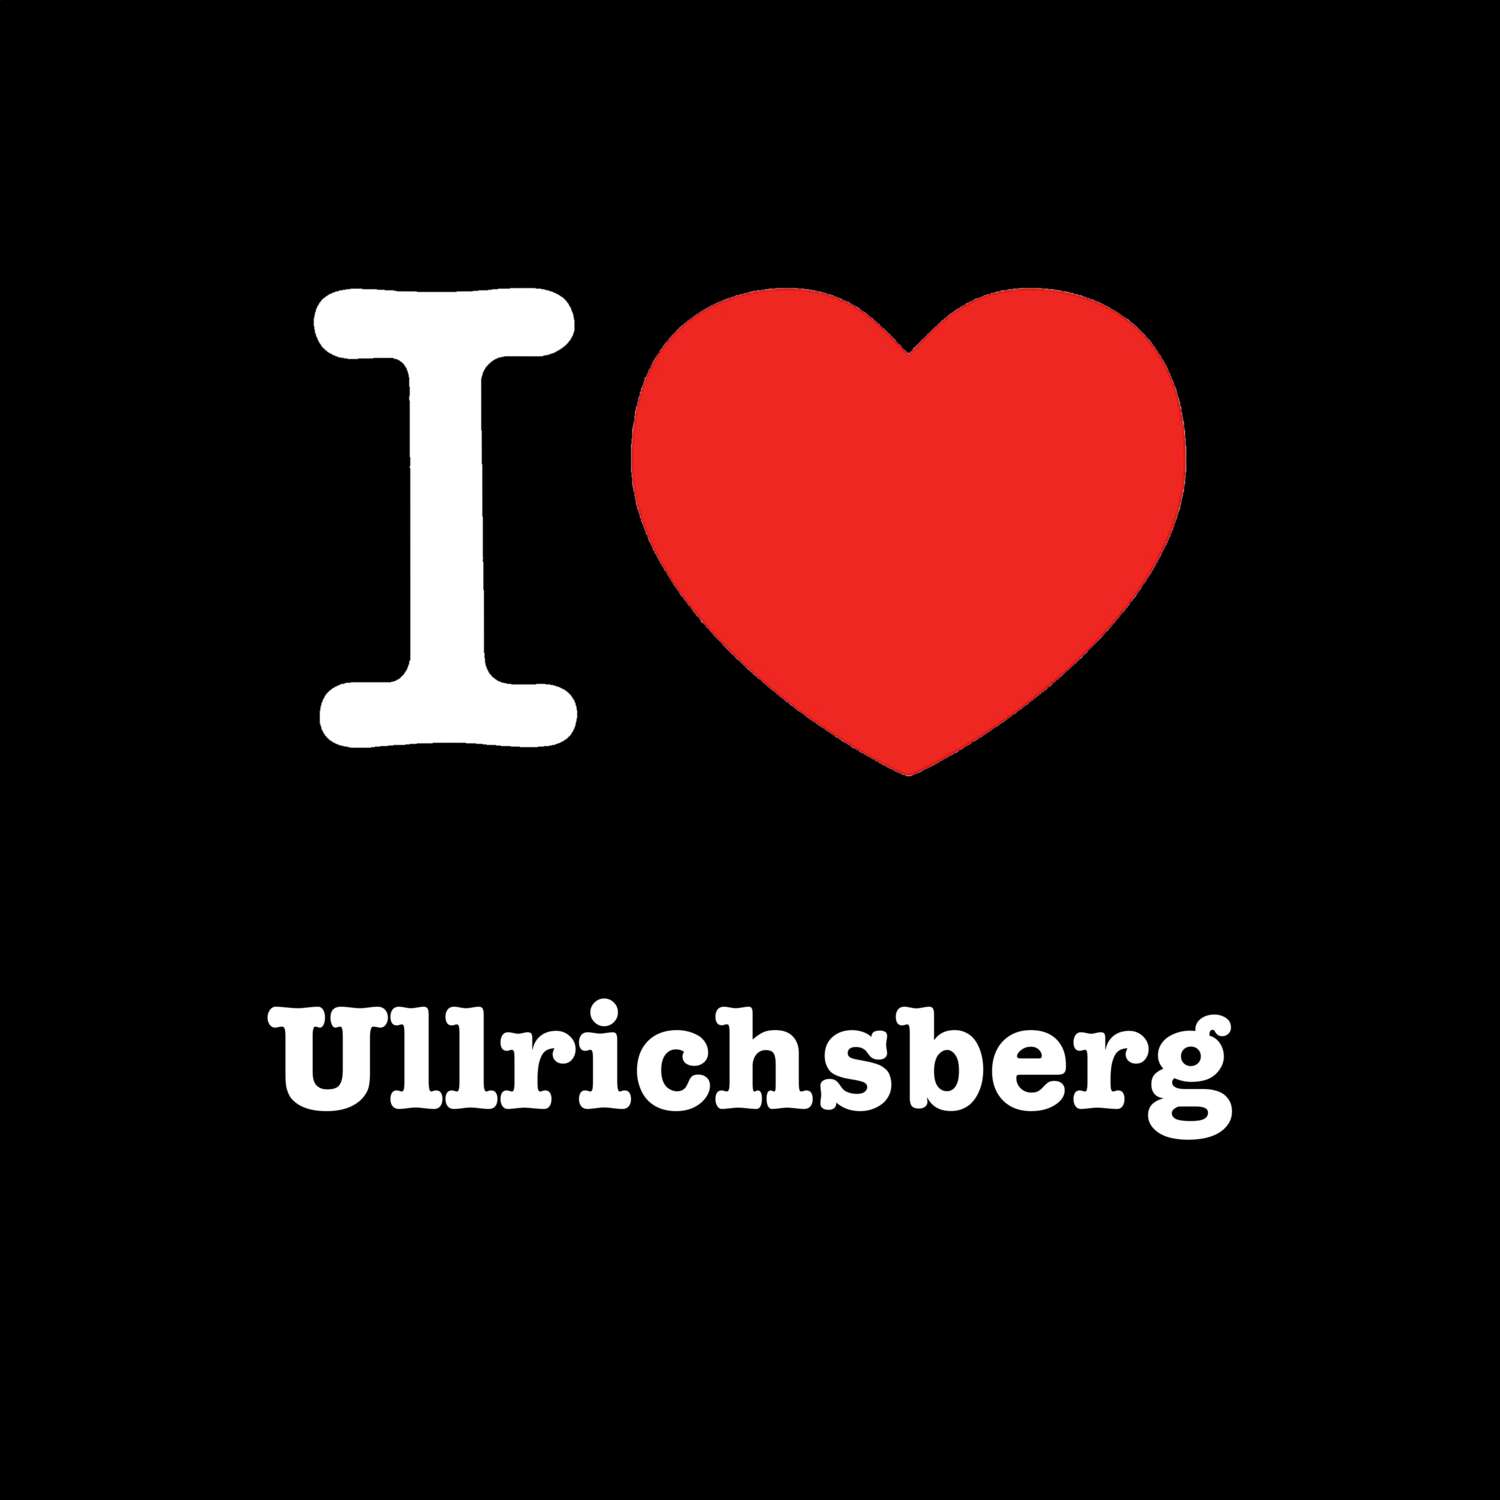 Ullrichsberg T-Shirt »I love«